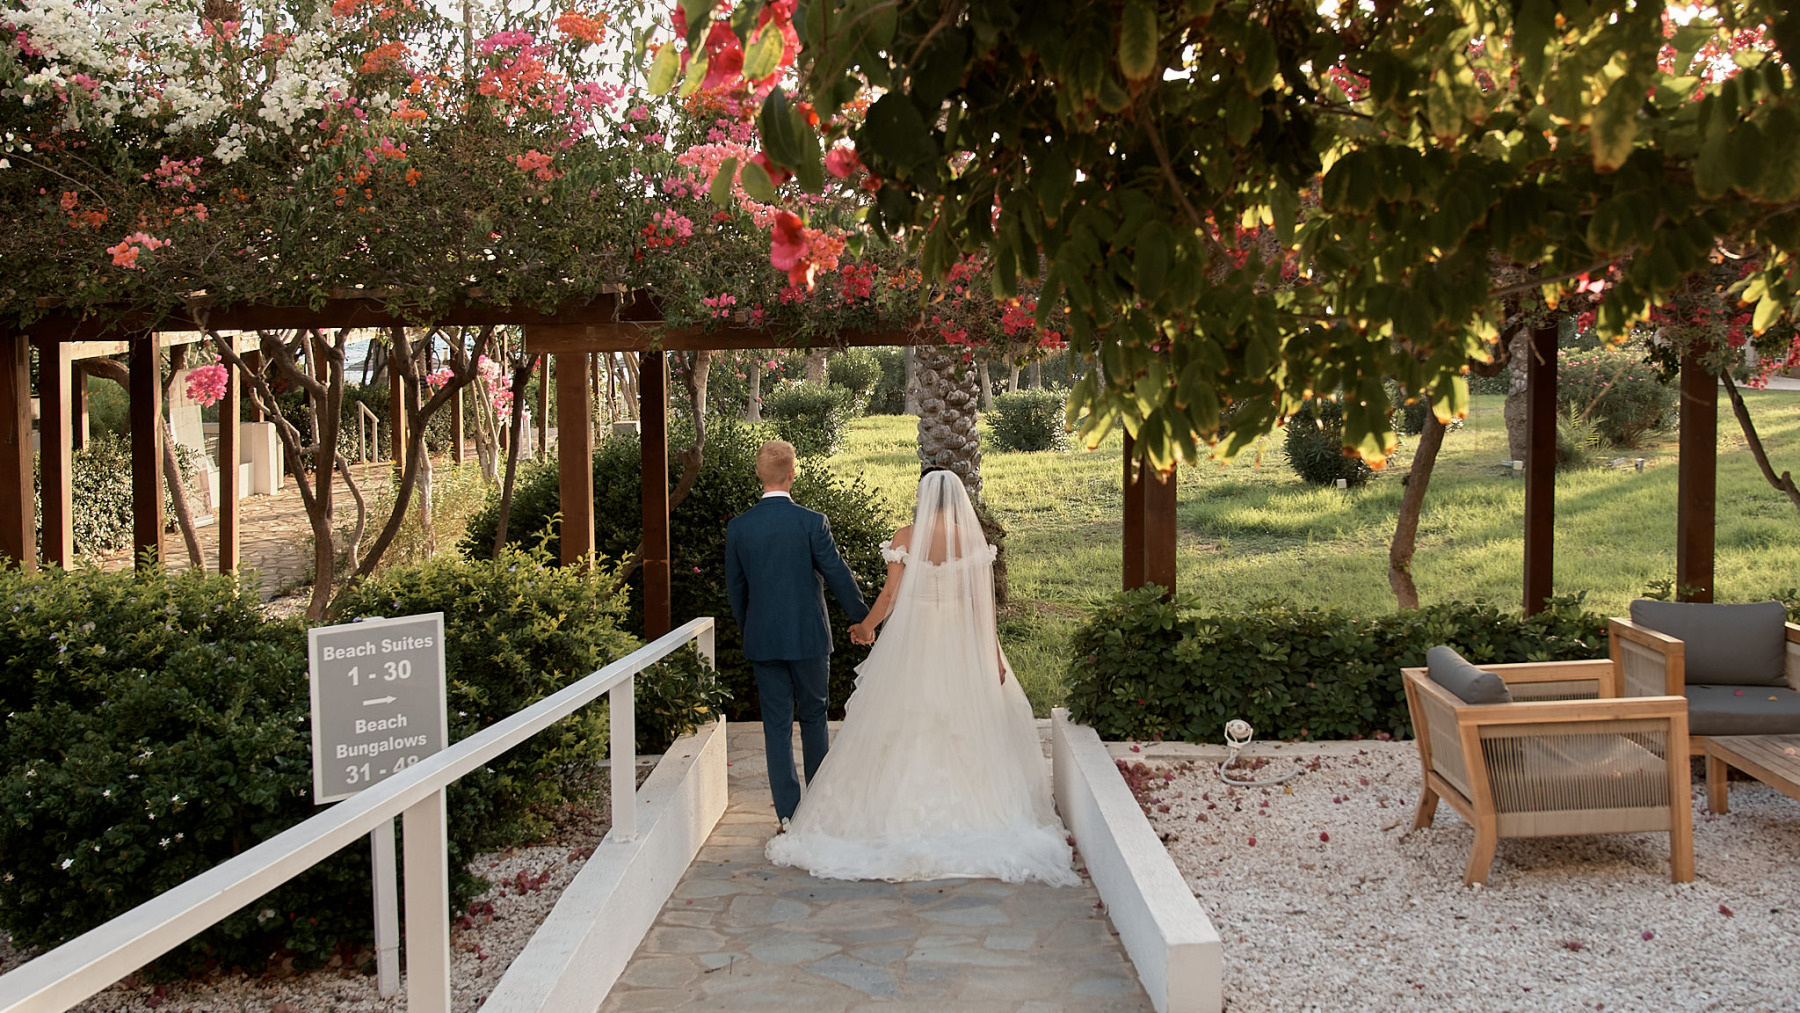 Wedding photograph, taken in Cyprus by Richard King